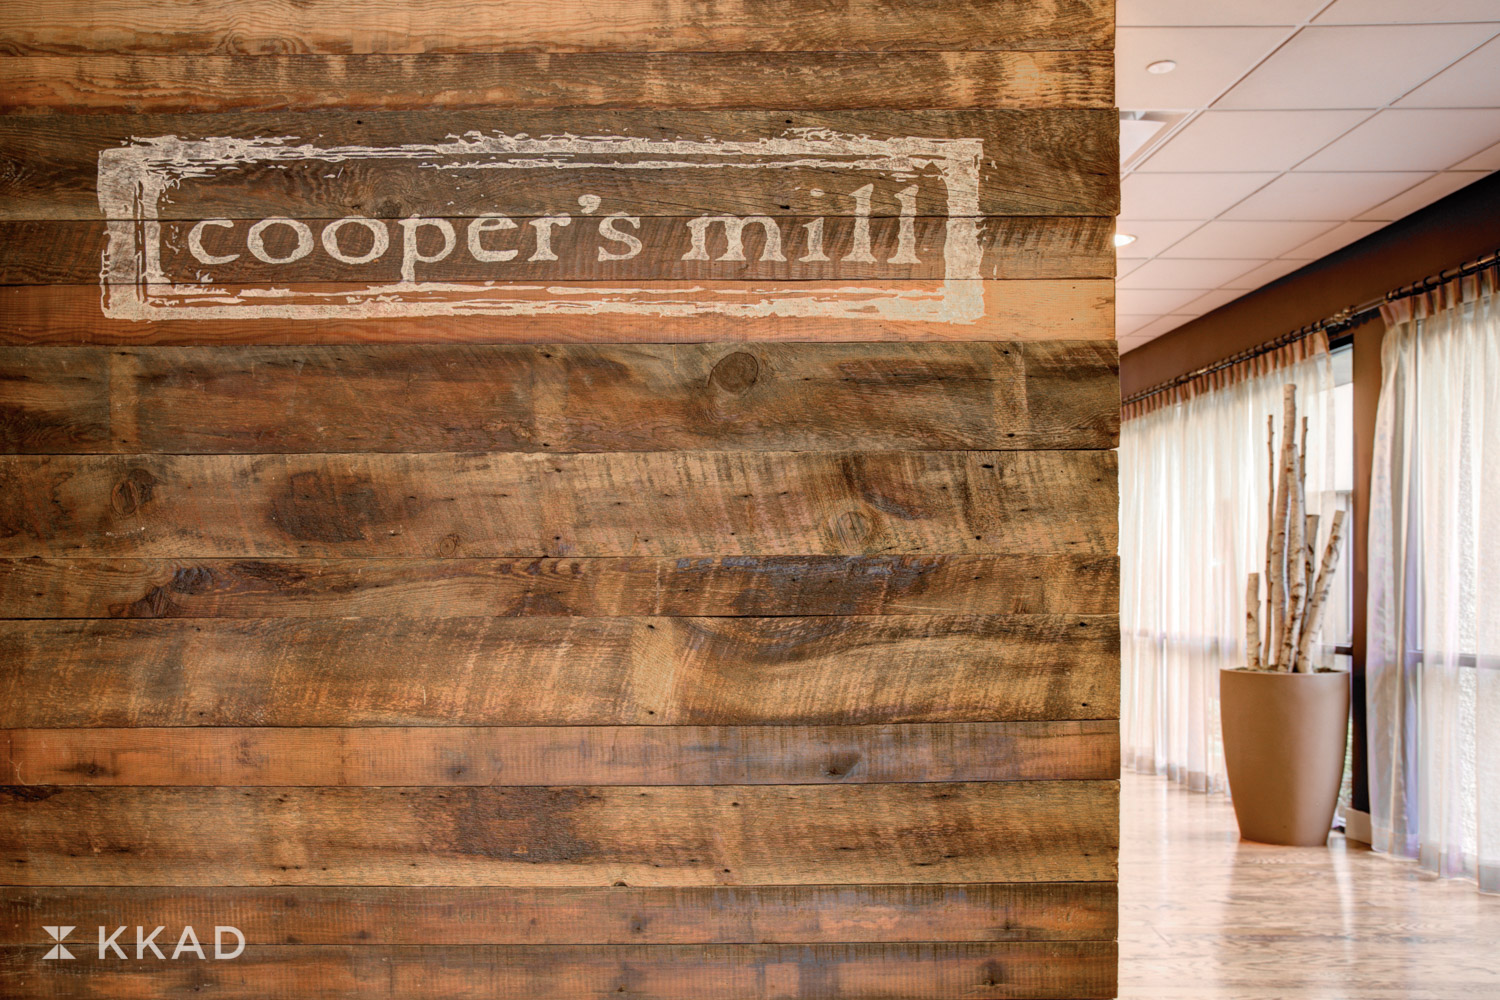 Cooper's Mill Signage